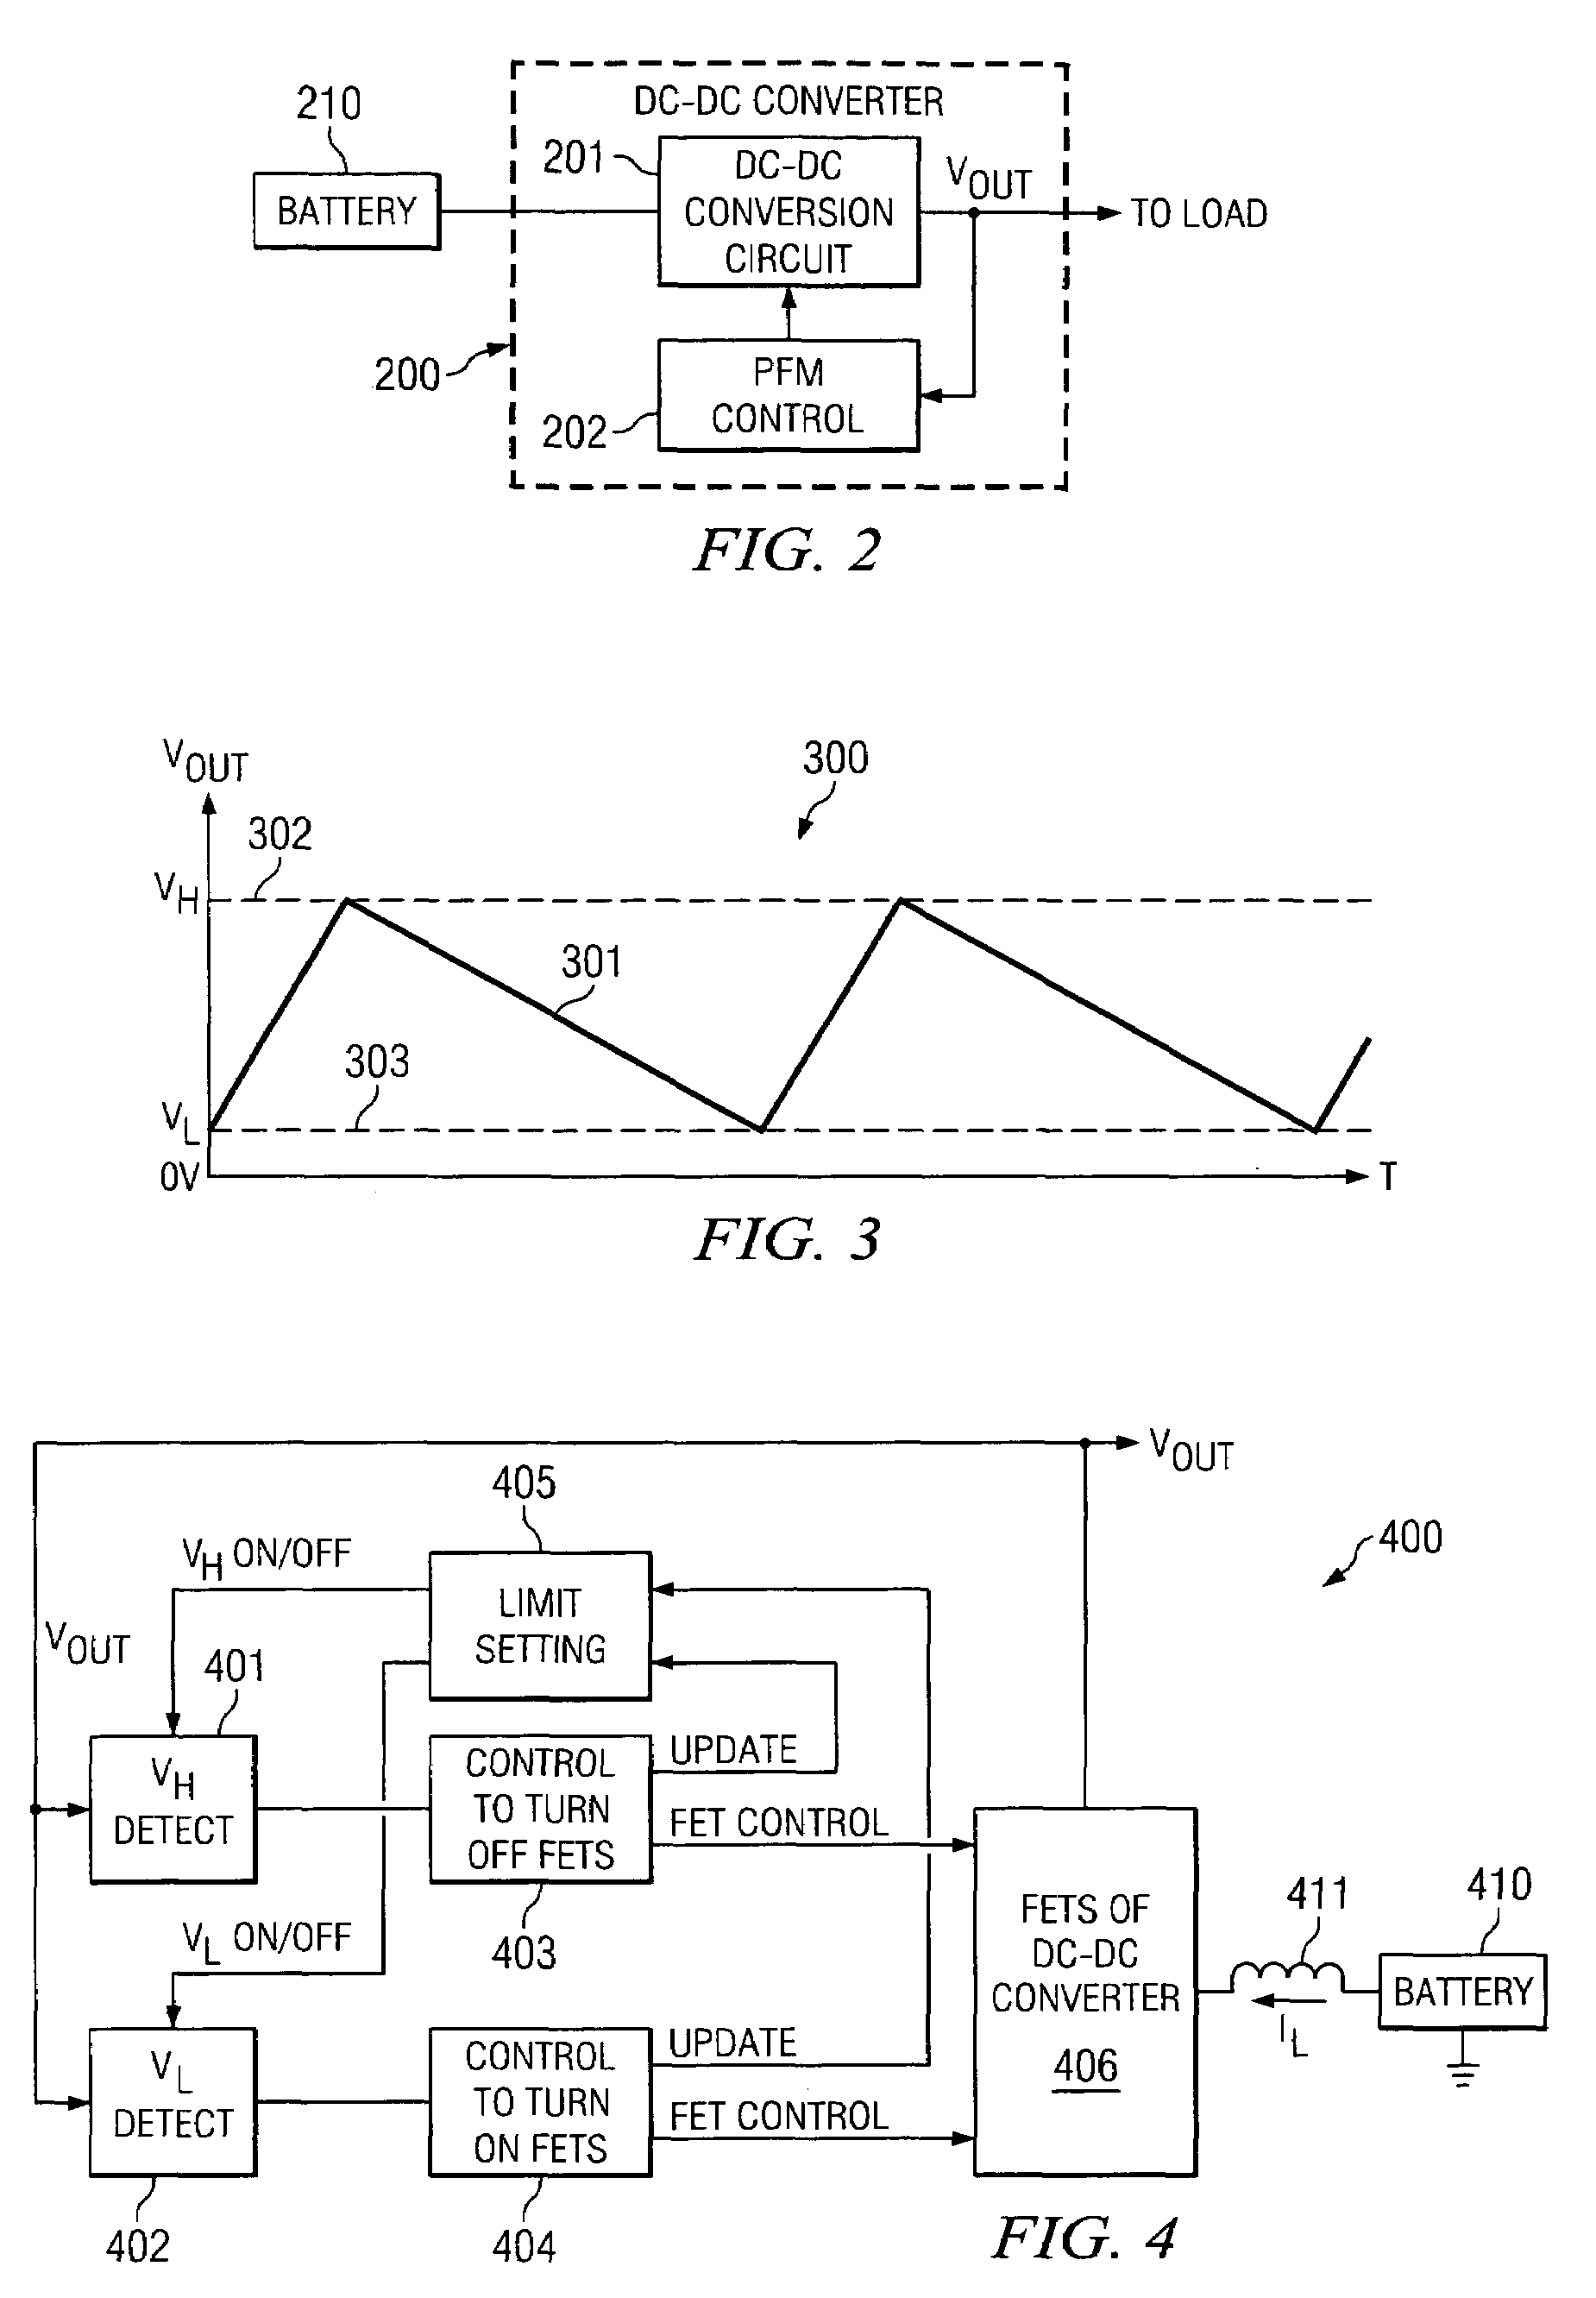 Pulse-skipping PFM DC-DC converter using a voltage mode control loop